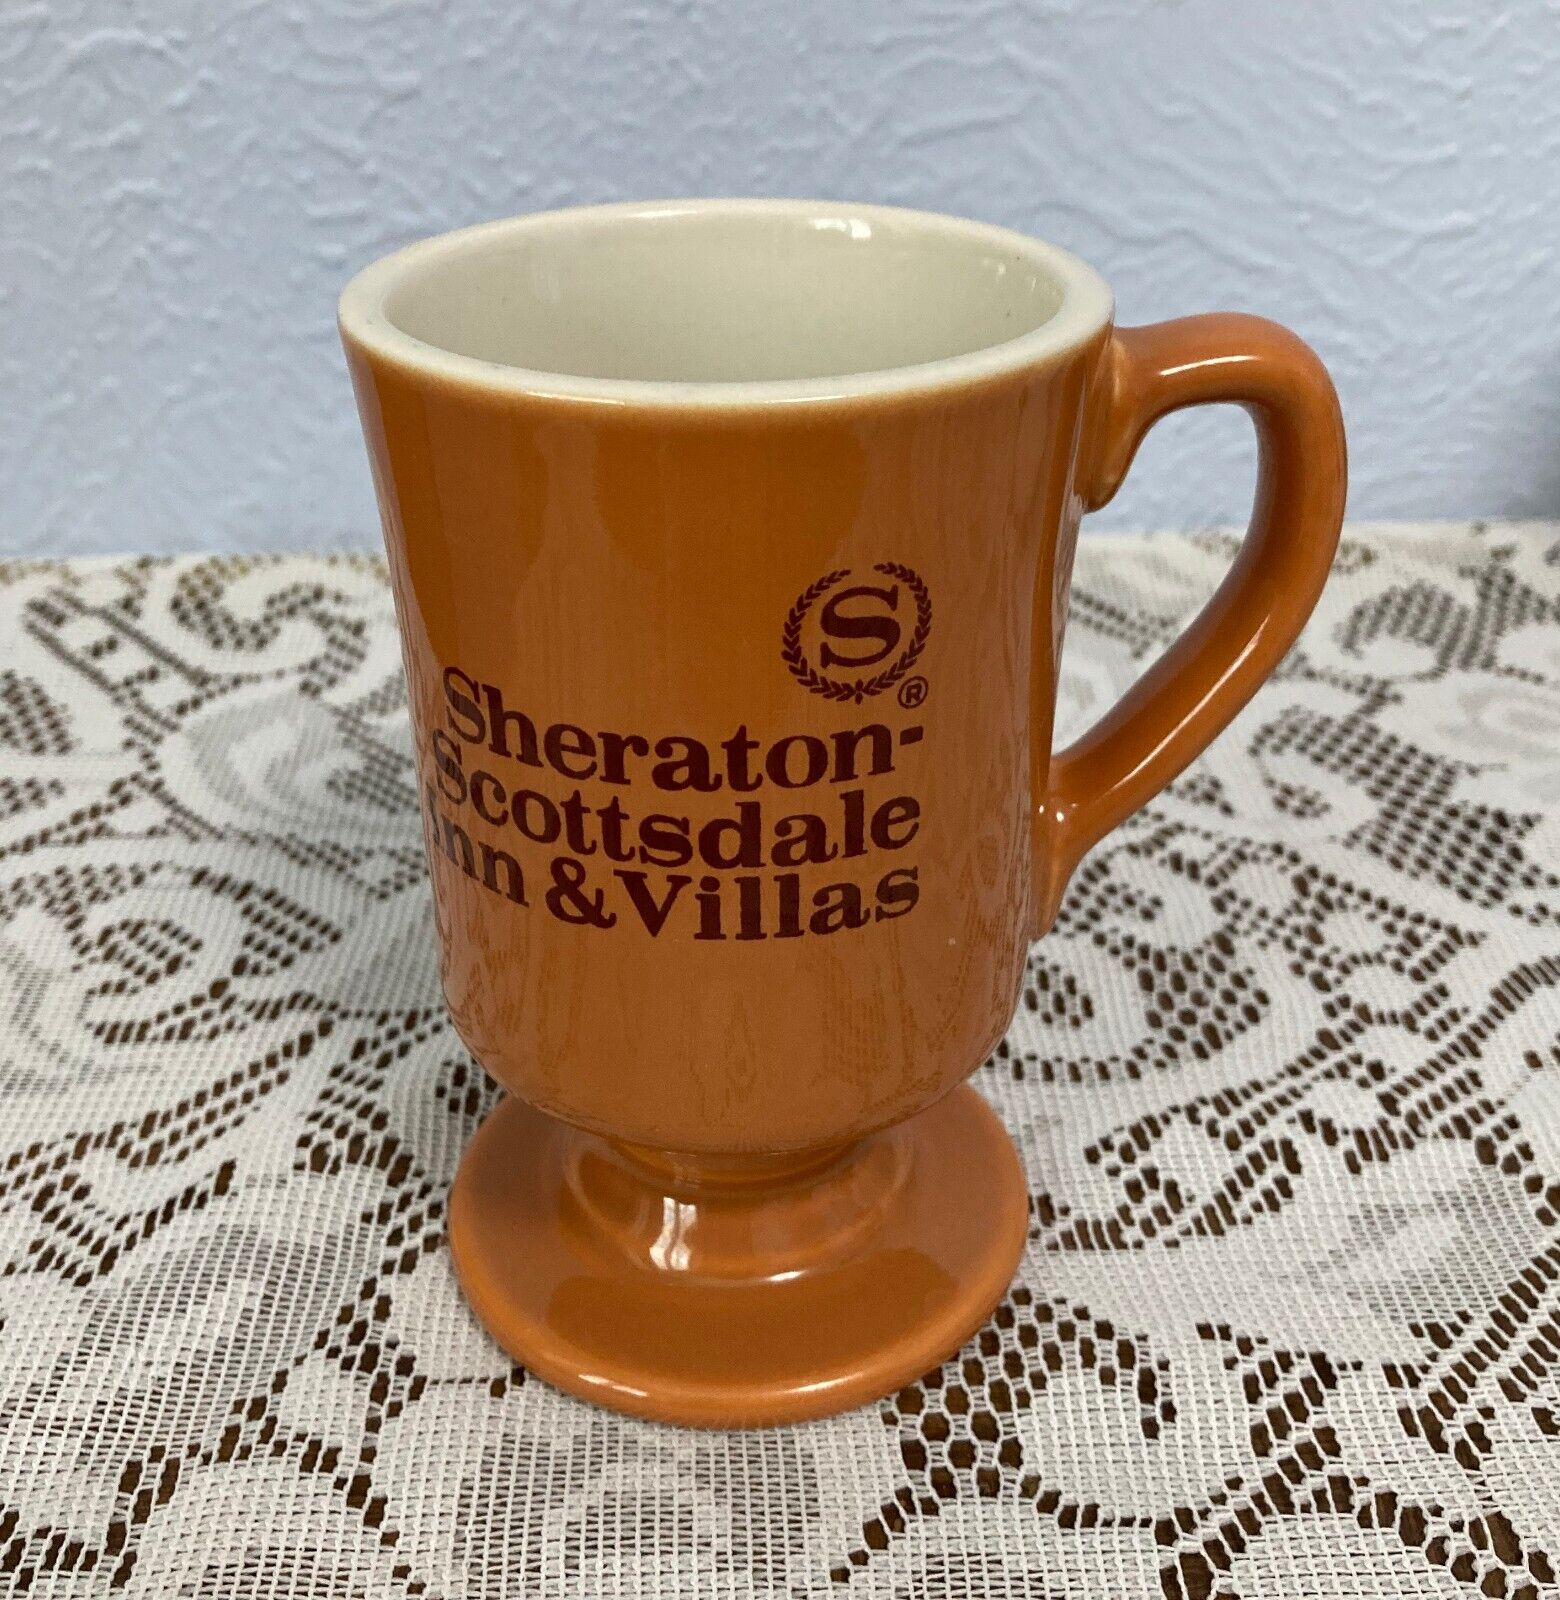 Vintage Sheraton-Scottsdale Inn & Villas Pedestal Coffee Mug ~ Arizona ~ MINT